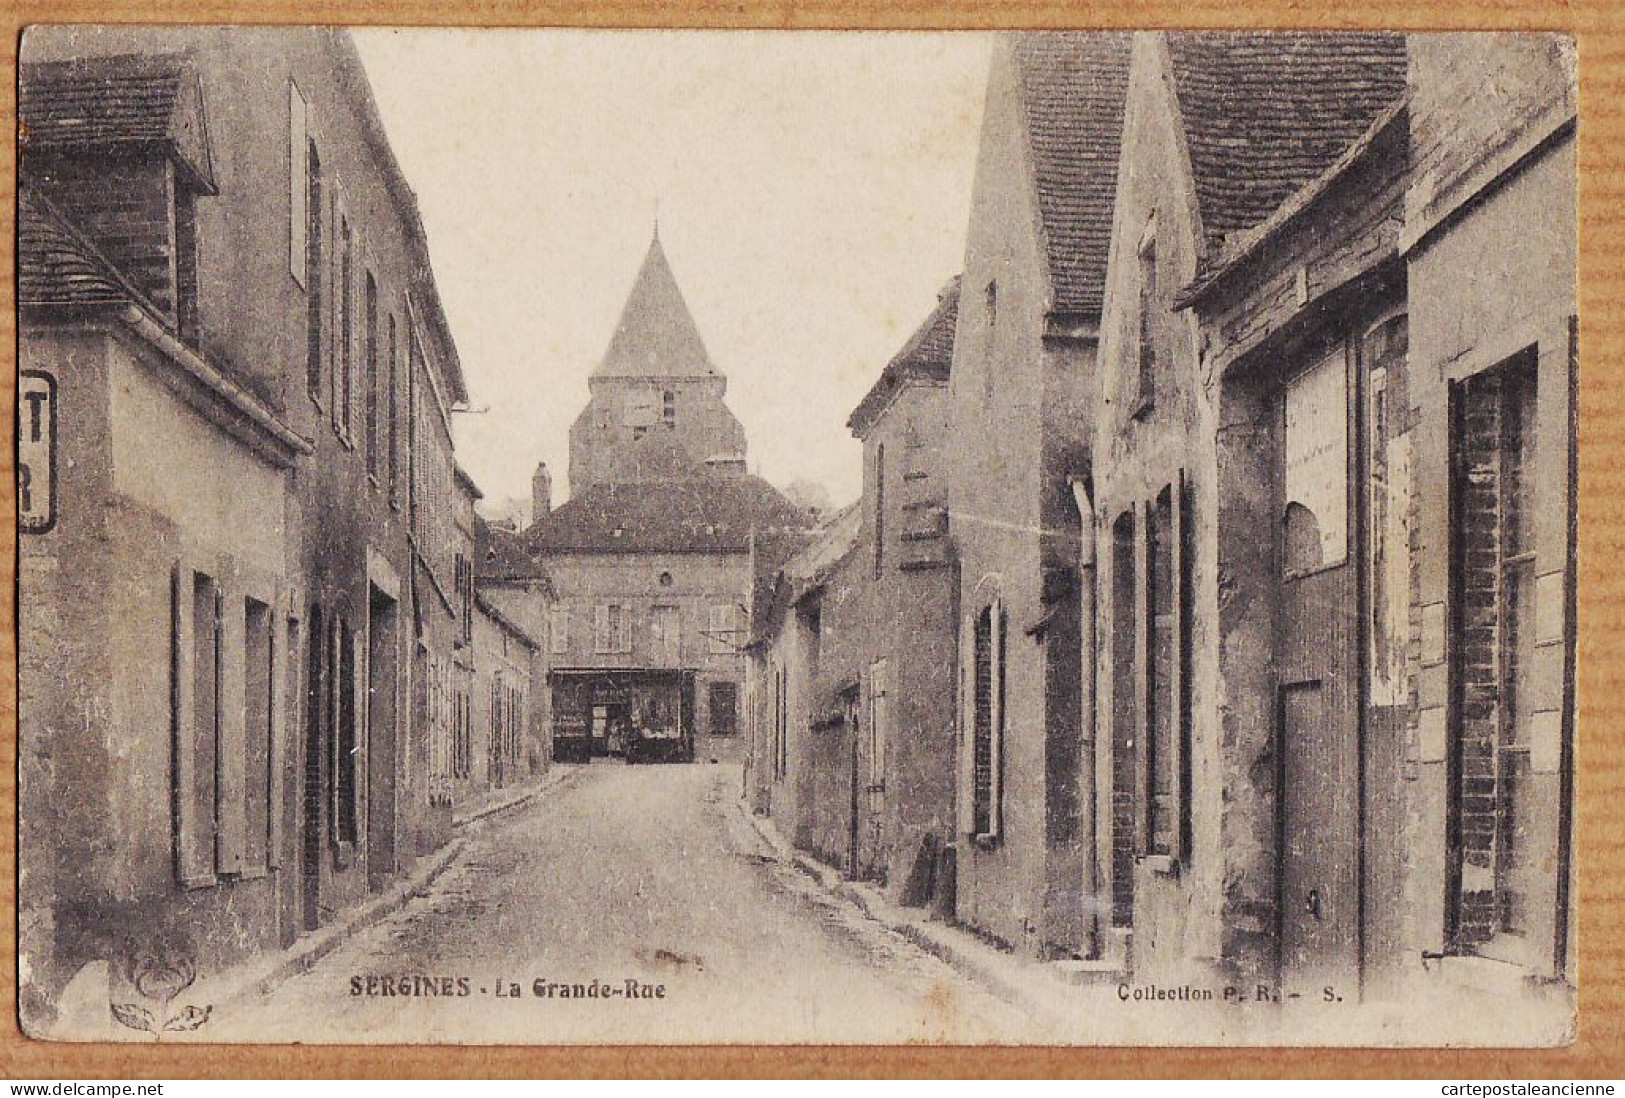 21828 / ⭐ SERGINES Yonne La GRANDE-RUE 1910s Collection P.R - S - Sergines